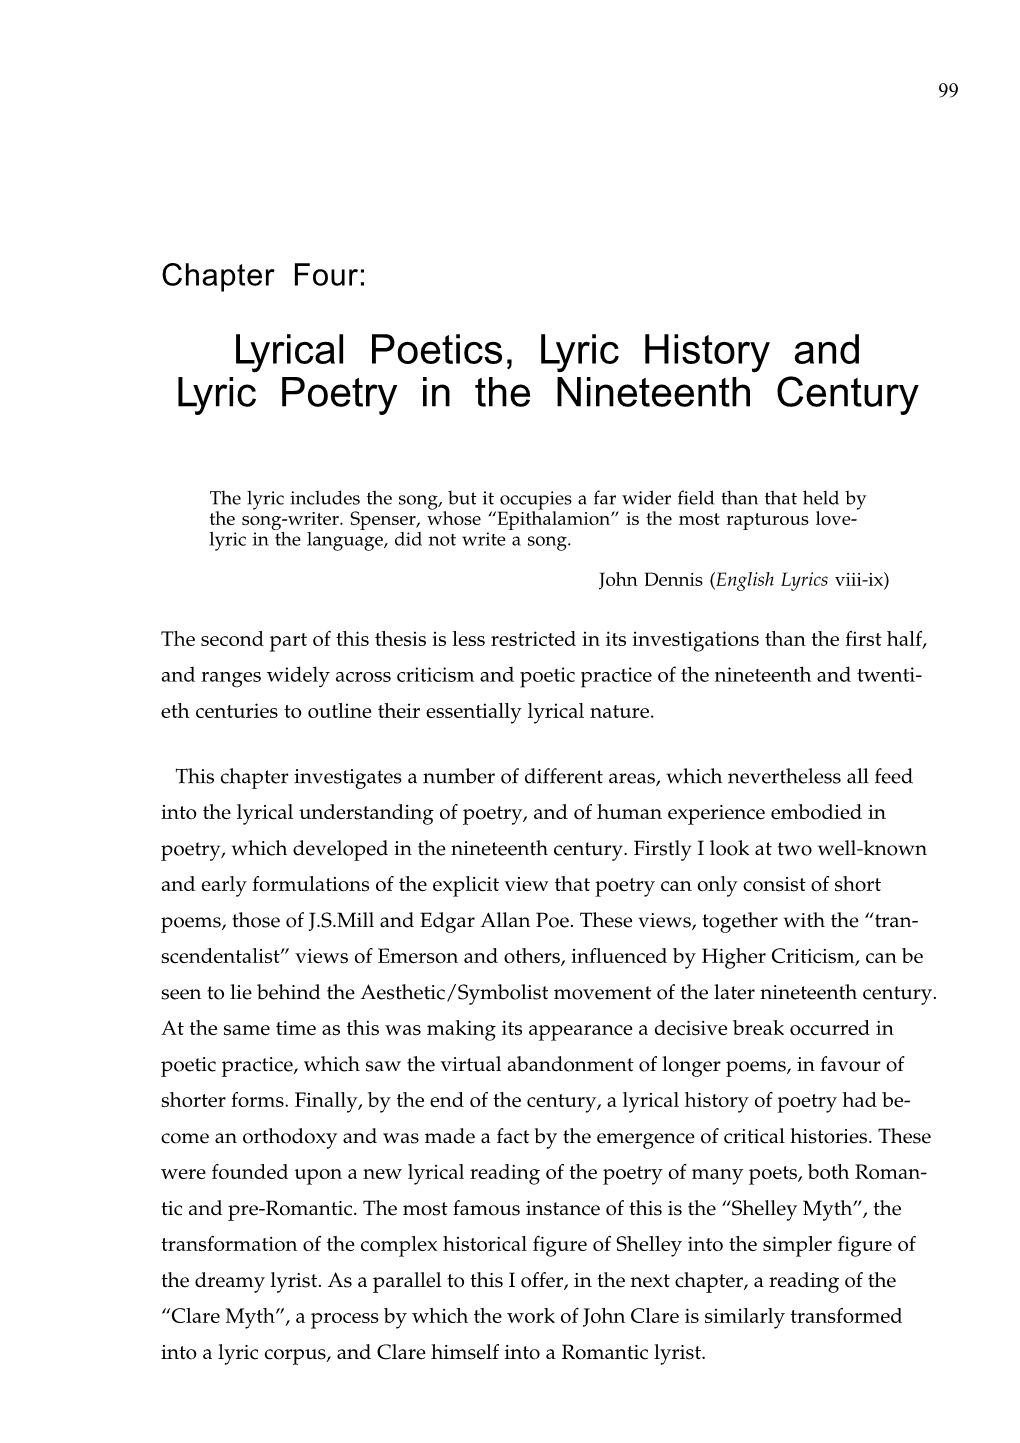 Lyrical Poetics, Lyric History and Lyric Poetry in the Nineteenth Century